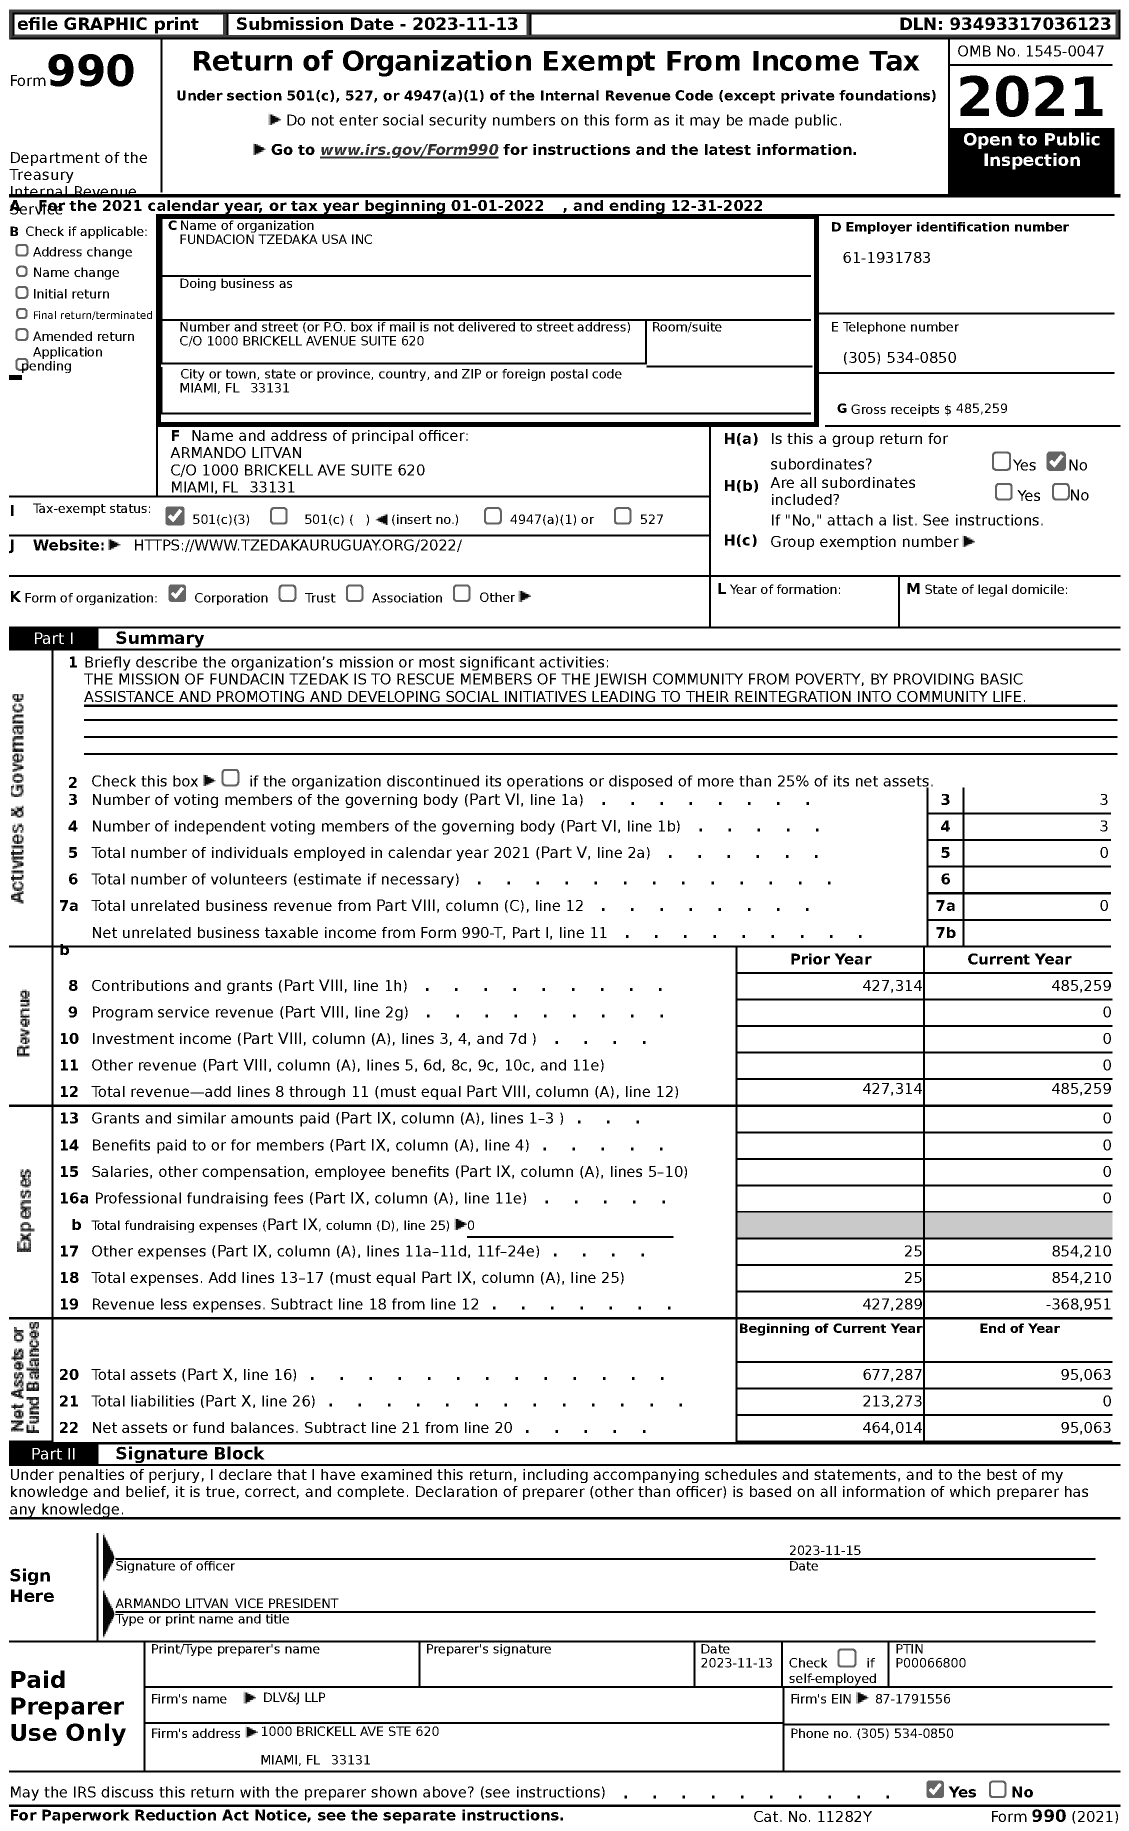 Image of first page of 2022 Form 990 for Fundacion Tzedaka USA